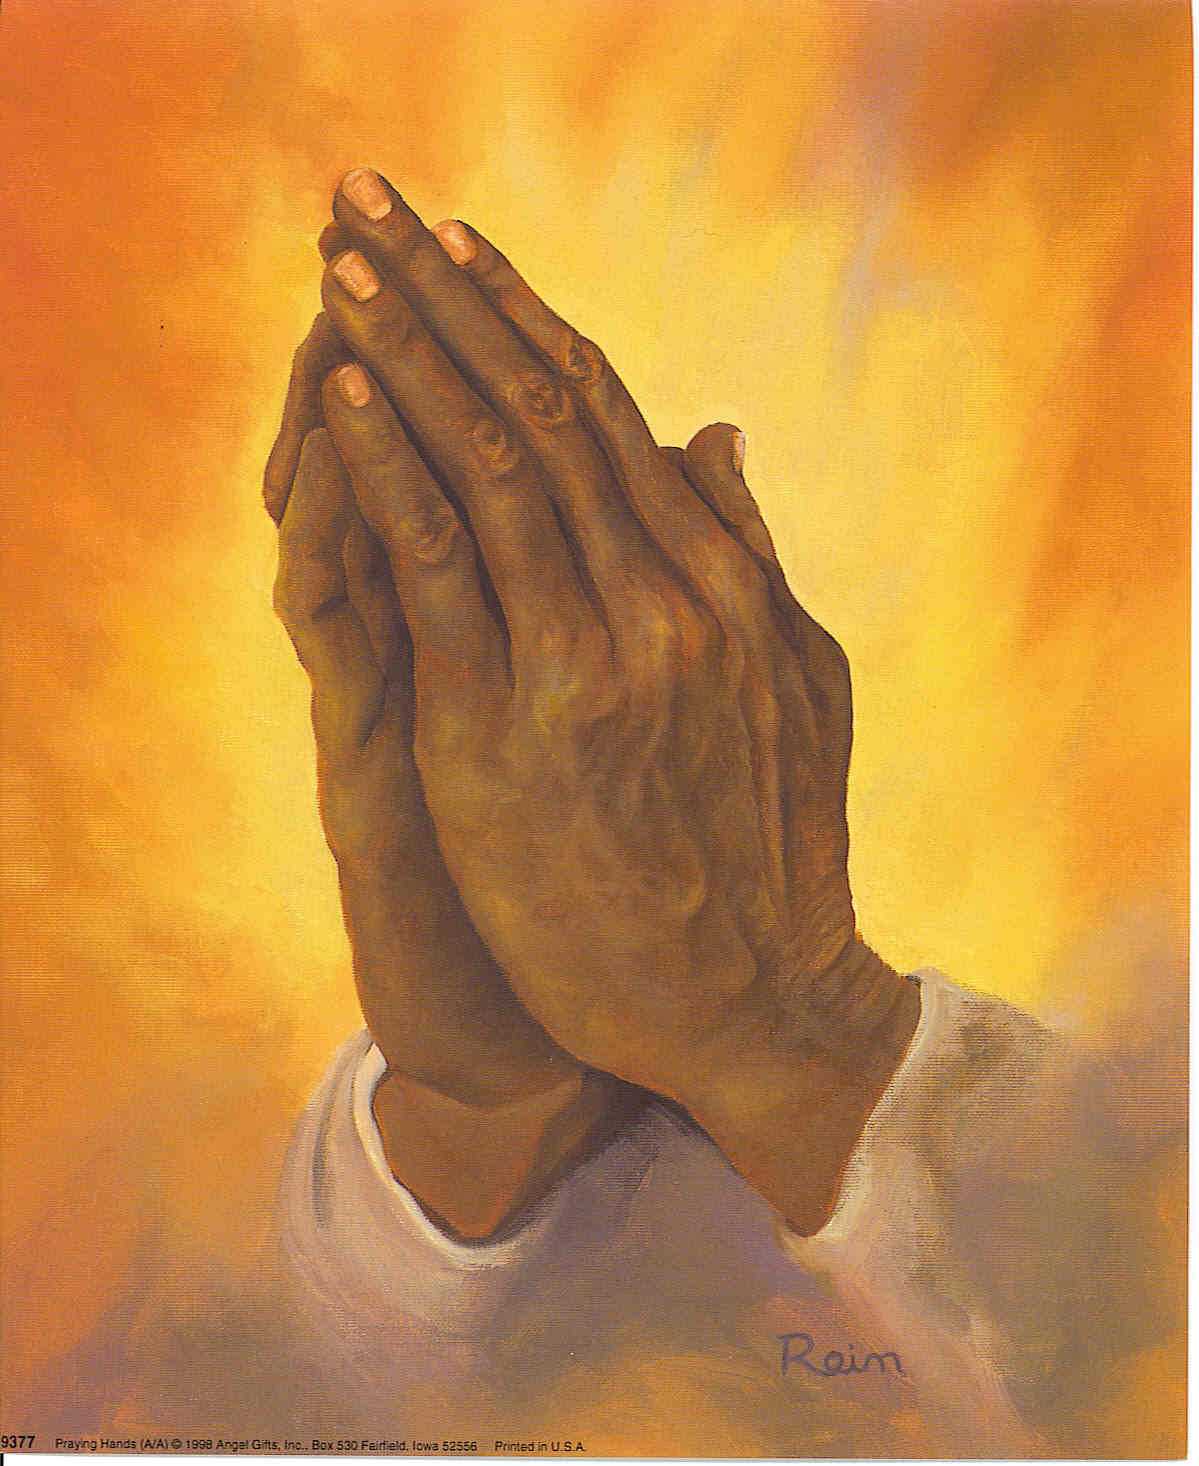 http://4.bp.blogspot.com/-XkkhciCVYU4/TWBXHA9R6GI/AAAAAAAAECE/8pSpy_Z3i_8/s1600/Praying+Hands.jpg